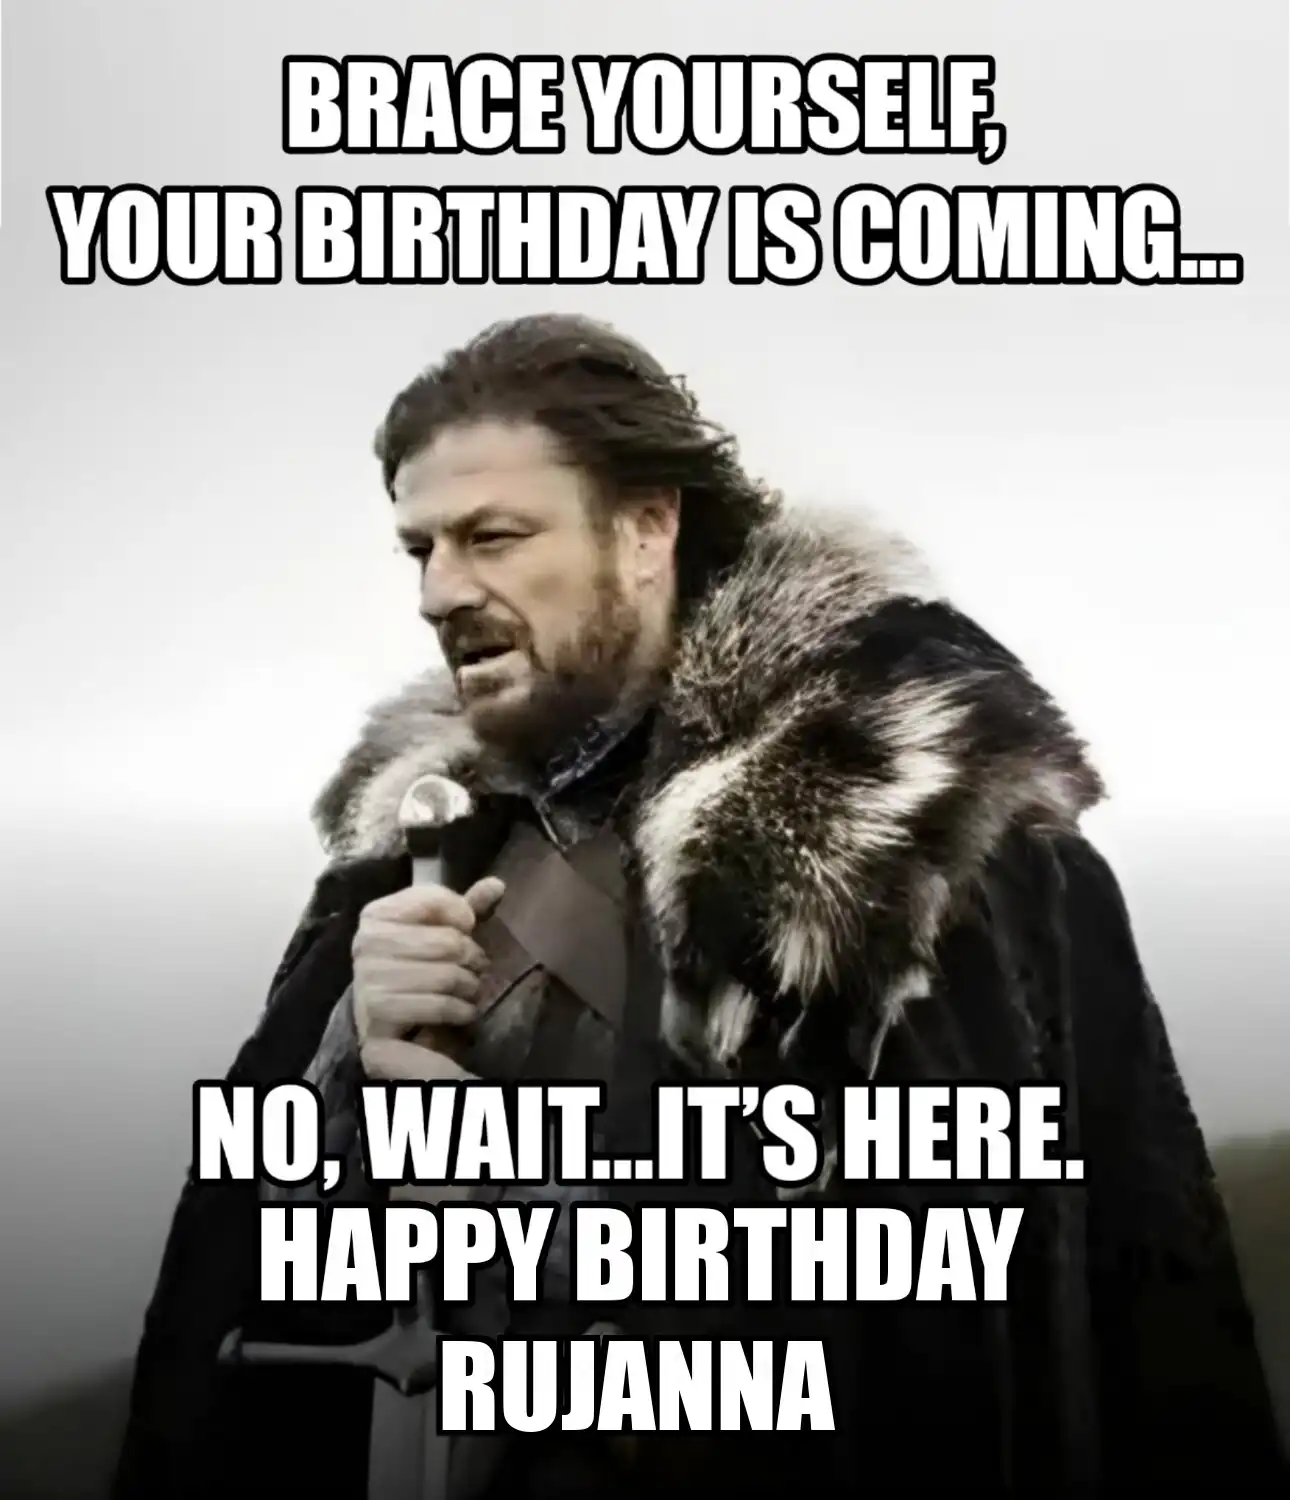 Happy Birthday Rujanna Brace Yourself Your Birthday Is Coming Meme